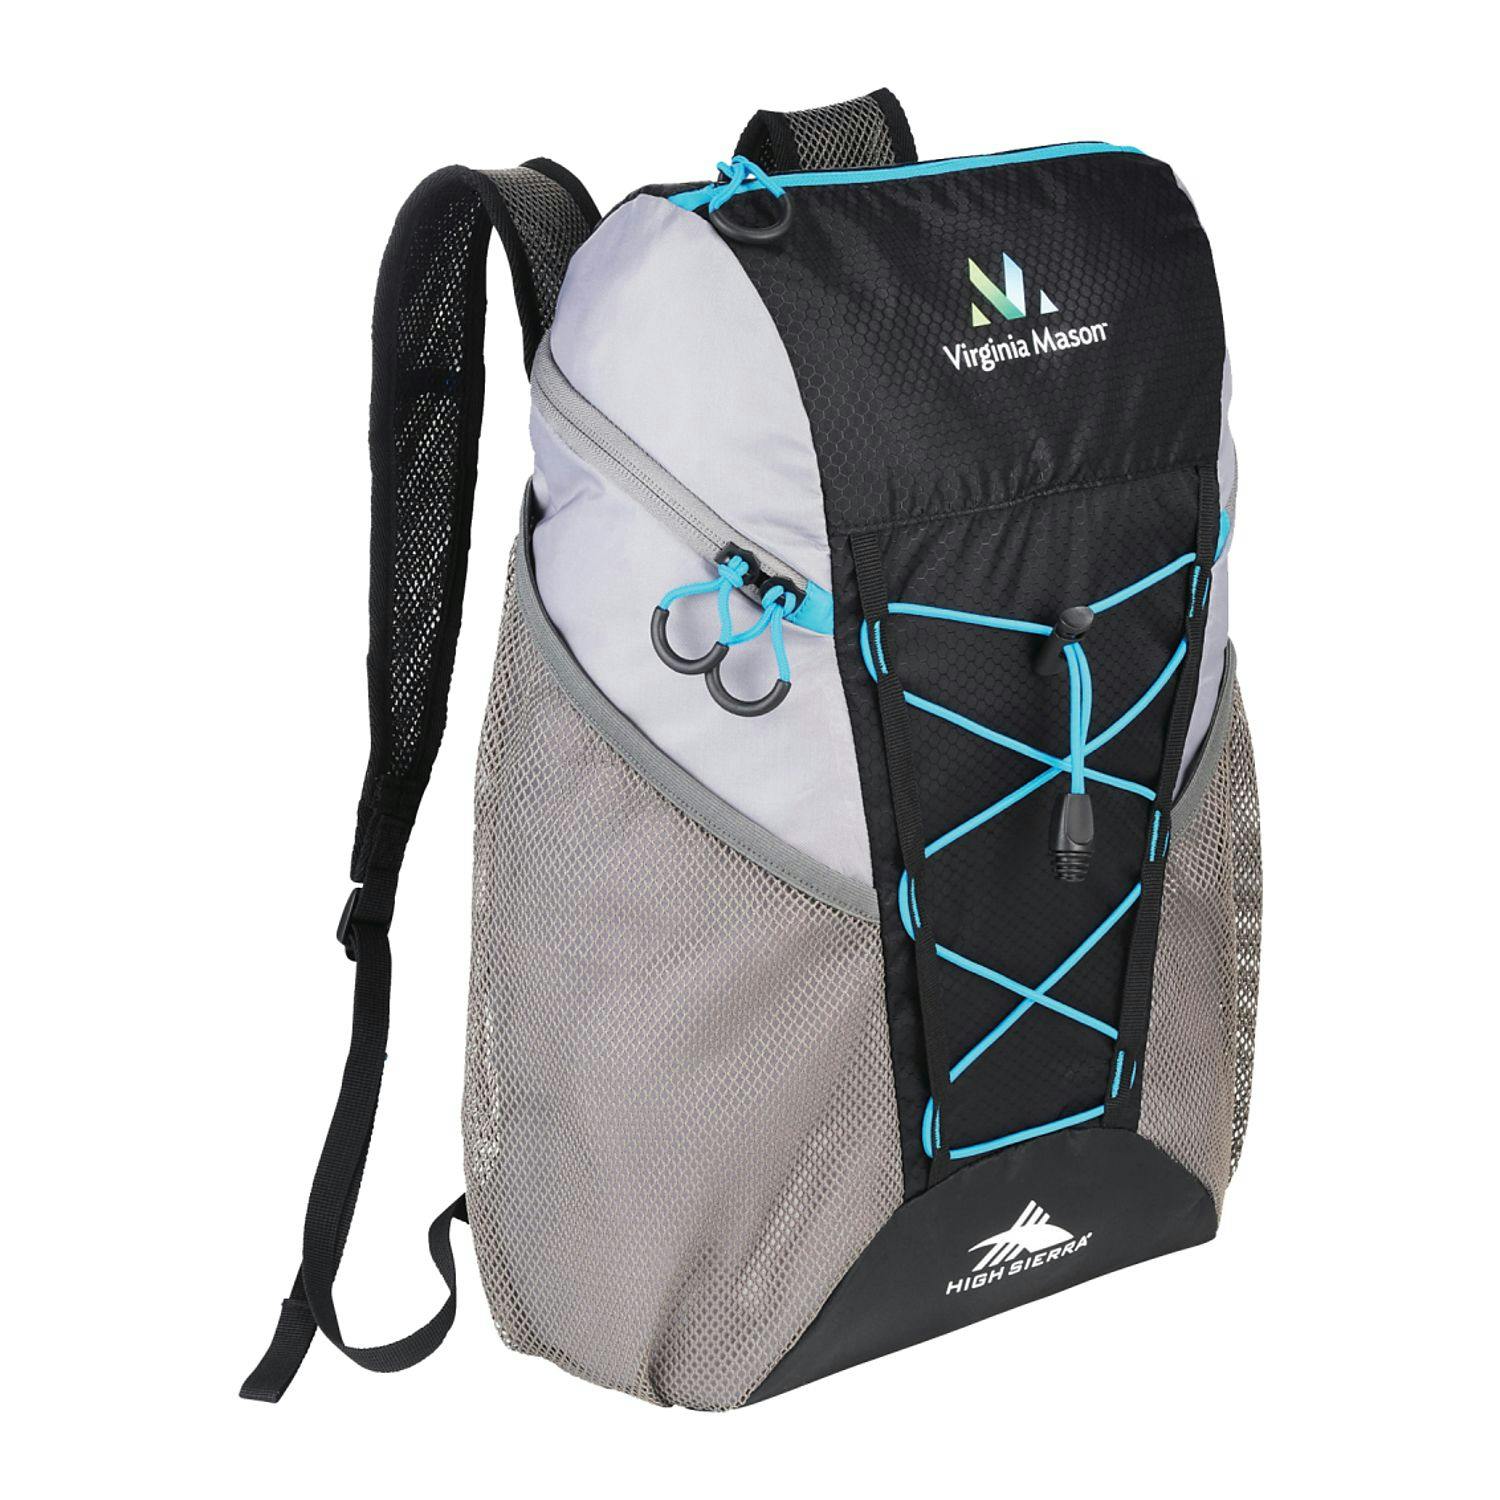 High Sierra Pack-n-Go Backpack - additional Image 1